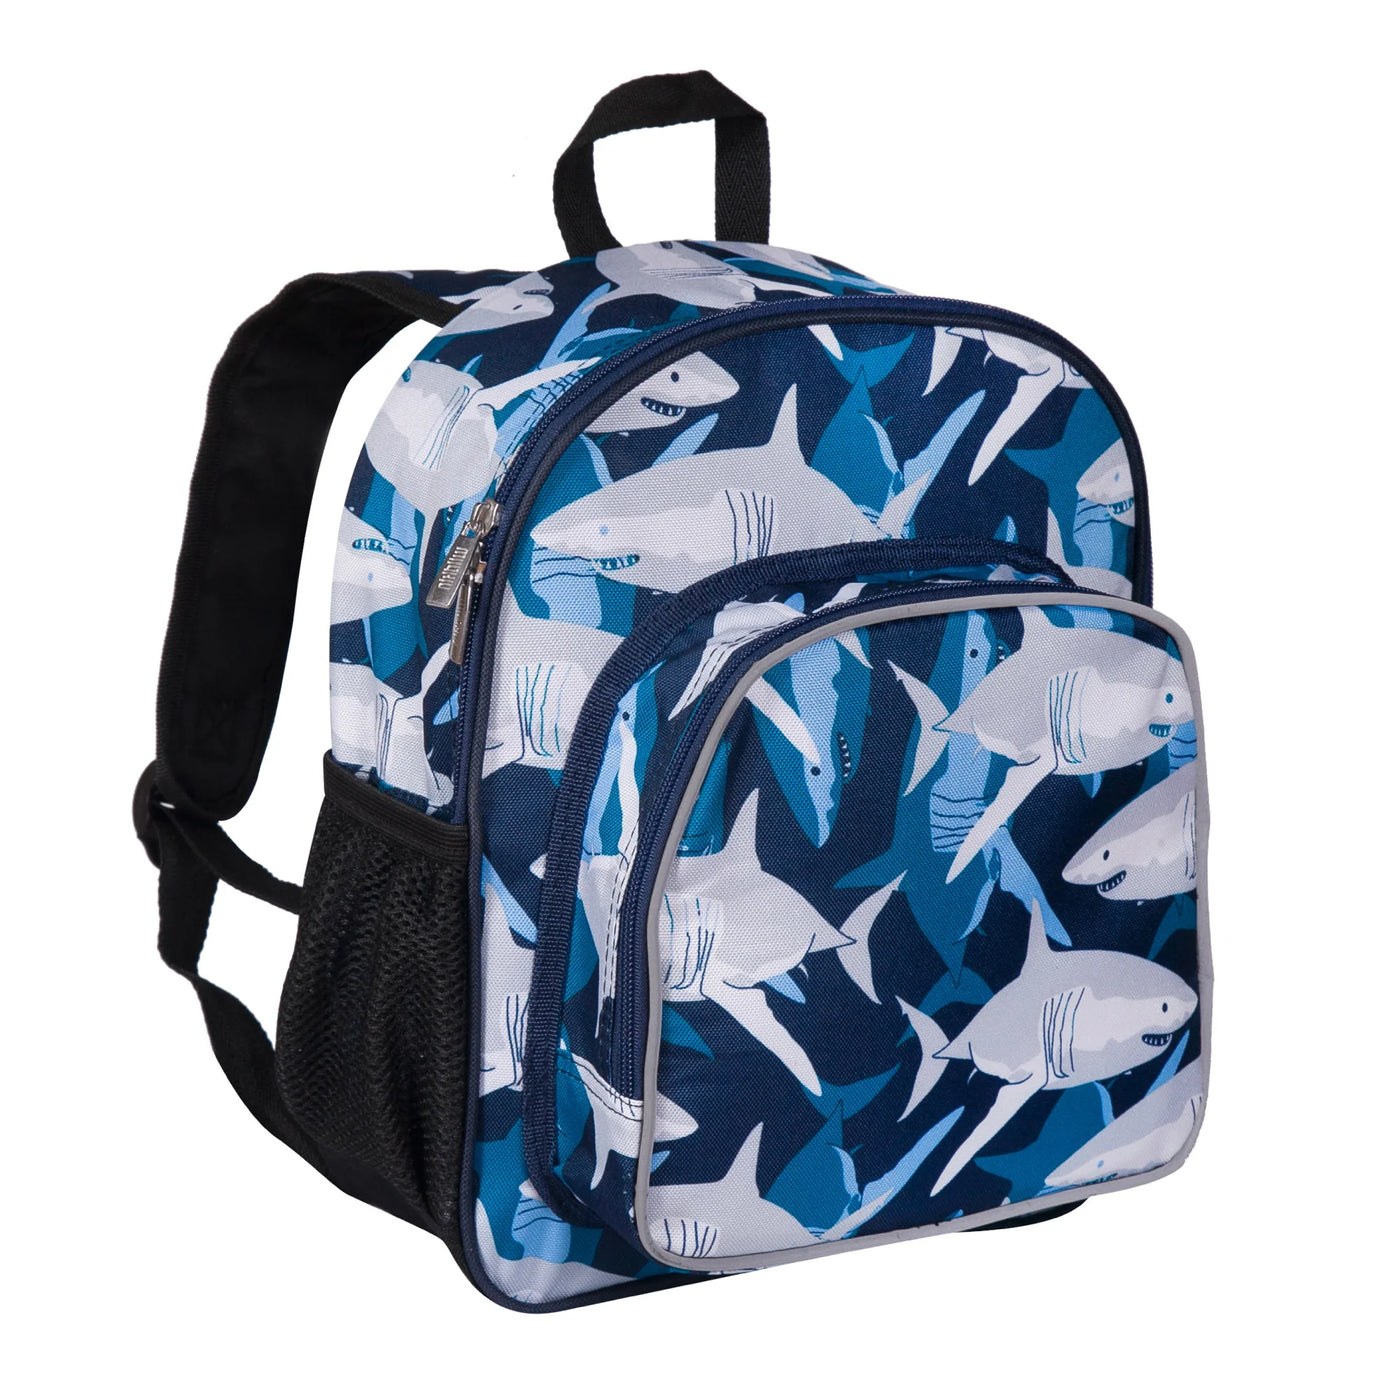 Wildkin Twelve Inch Backpack + More Options